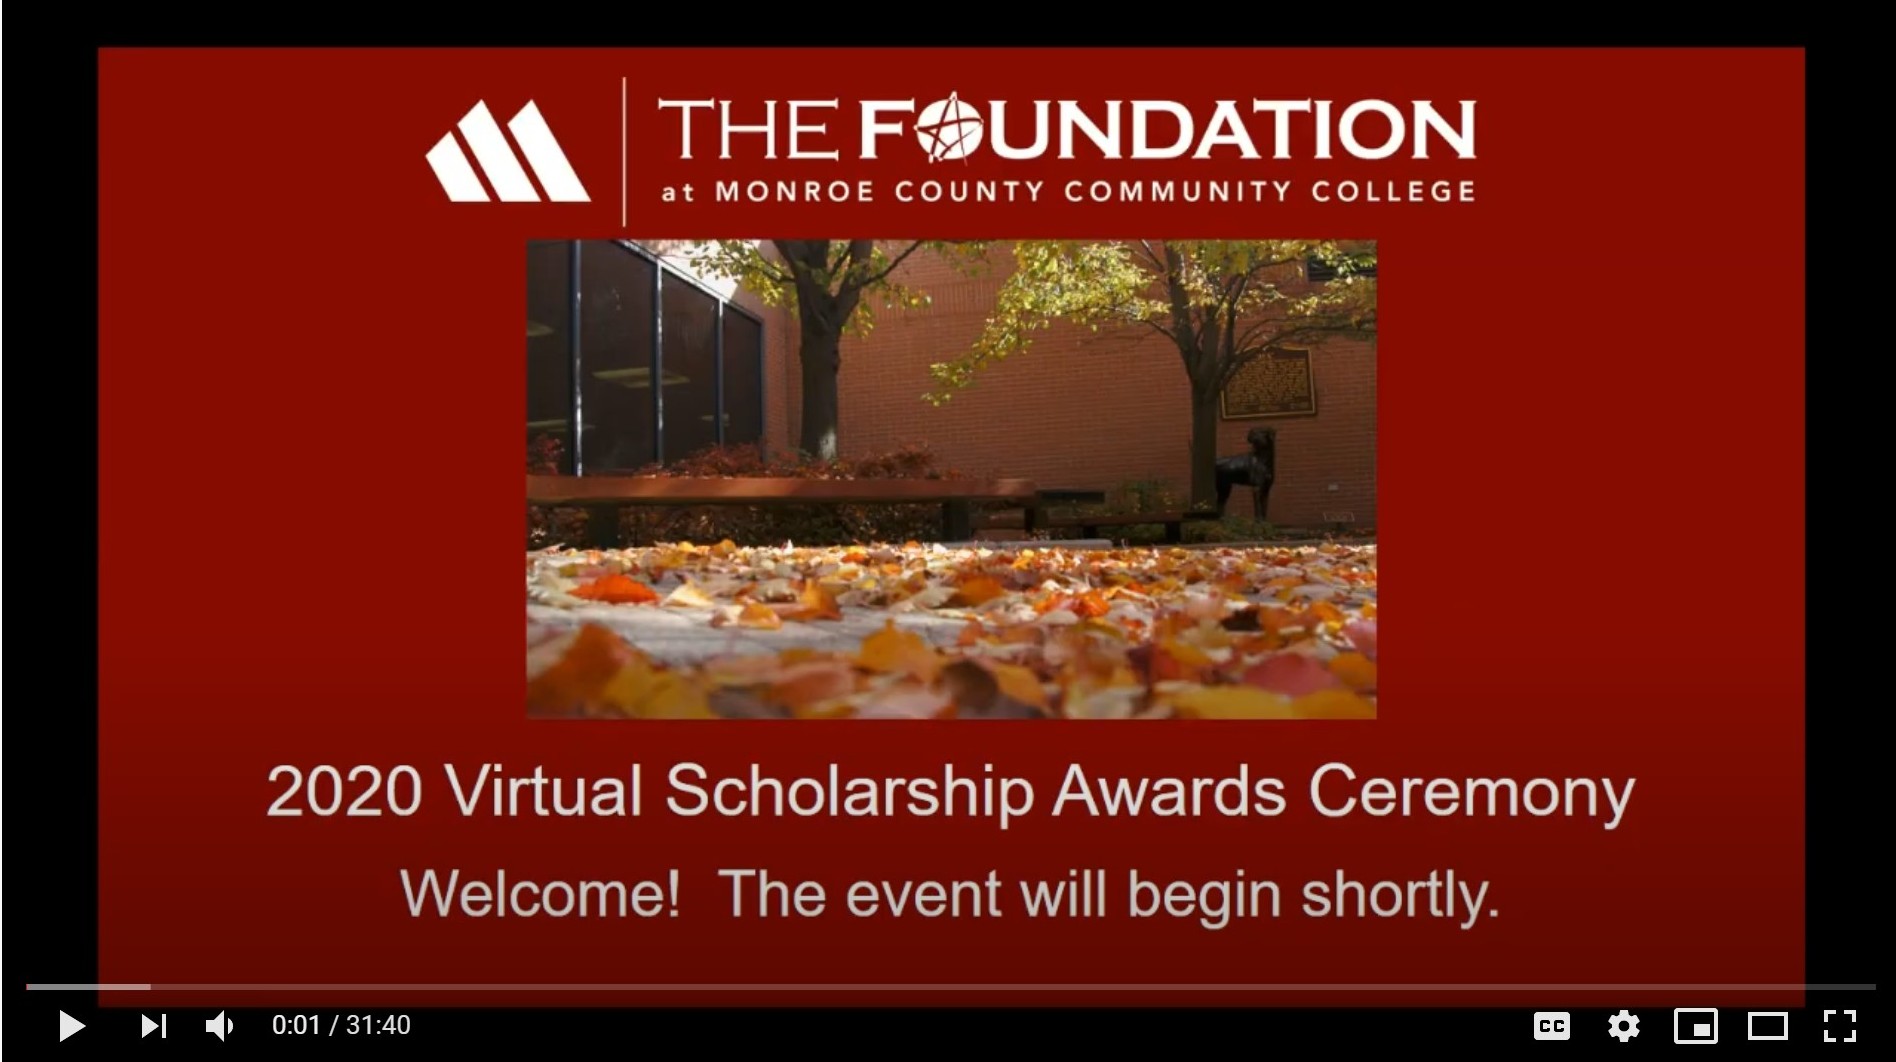 Scholarship Award YouTube link